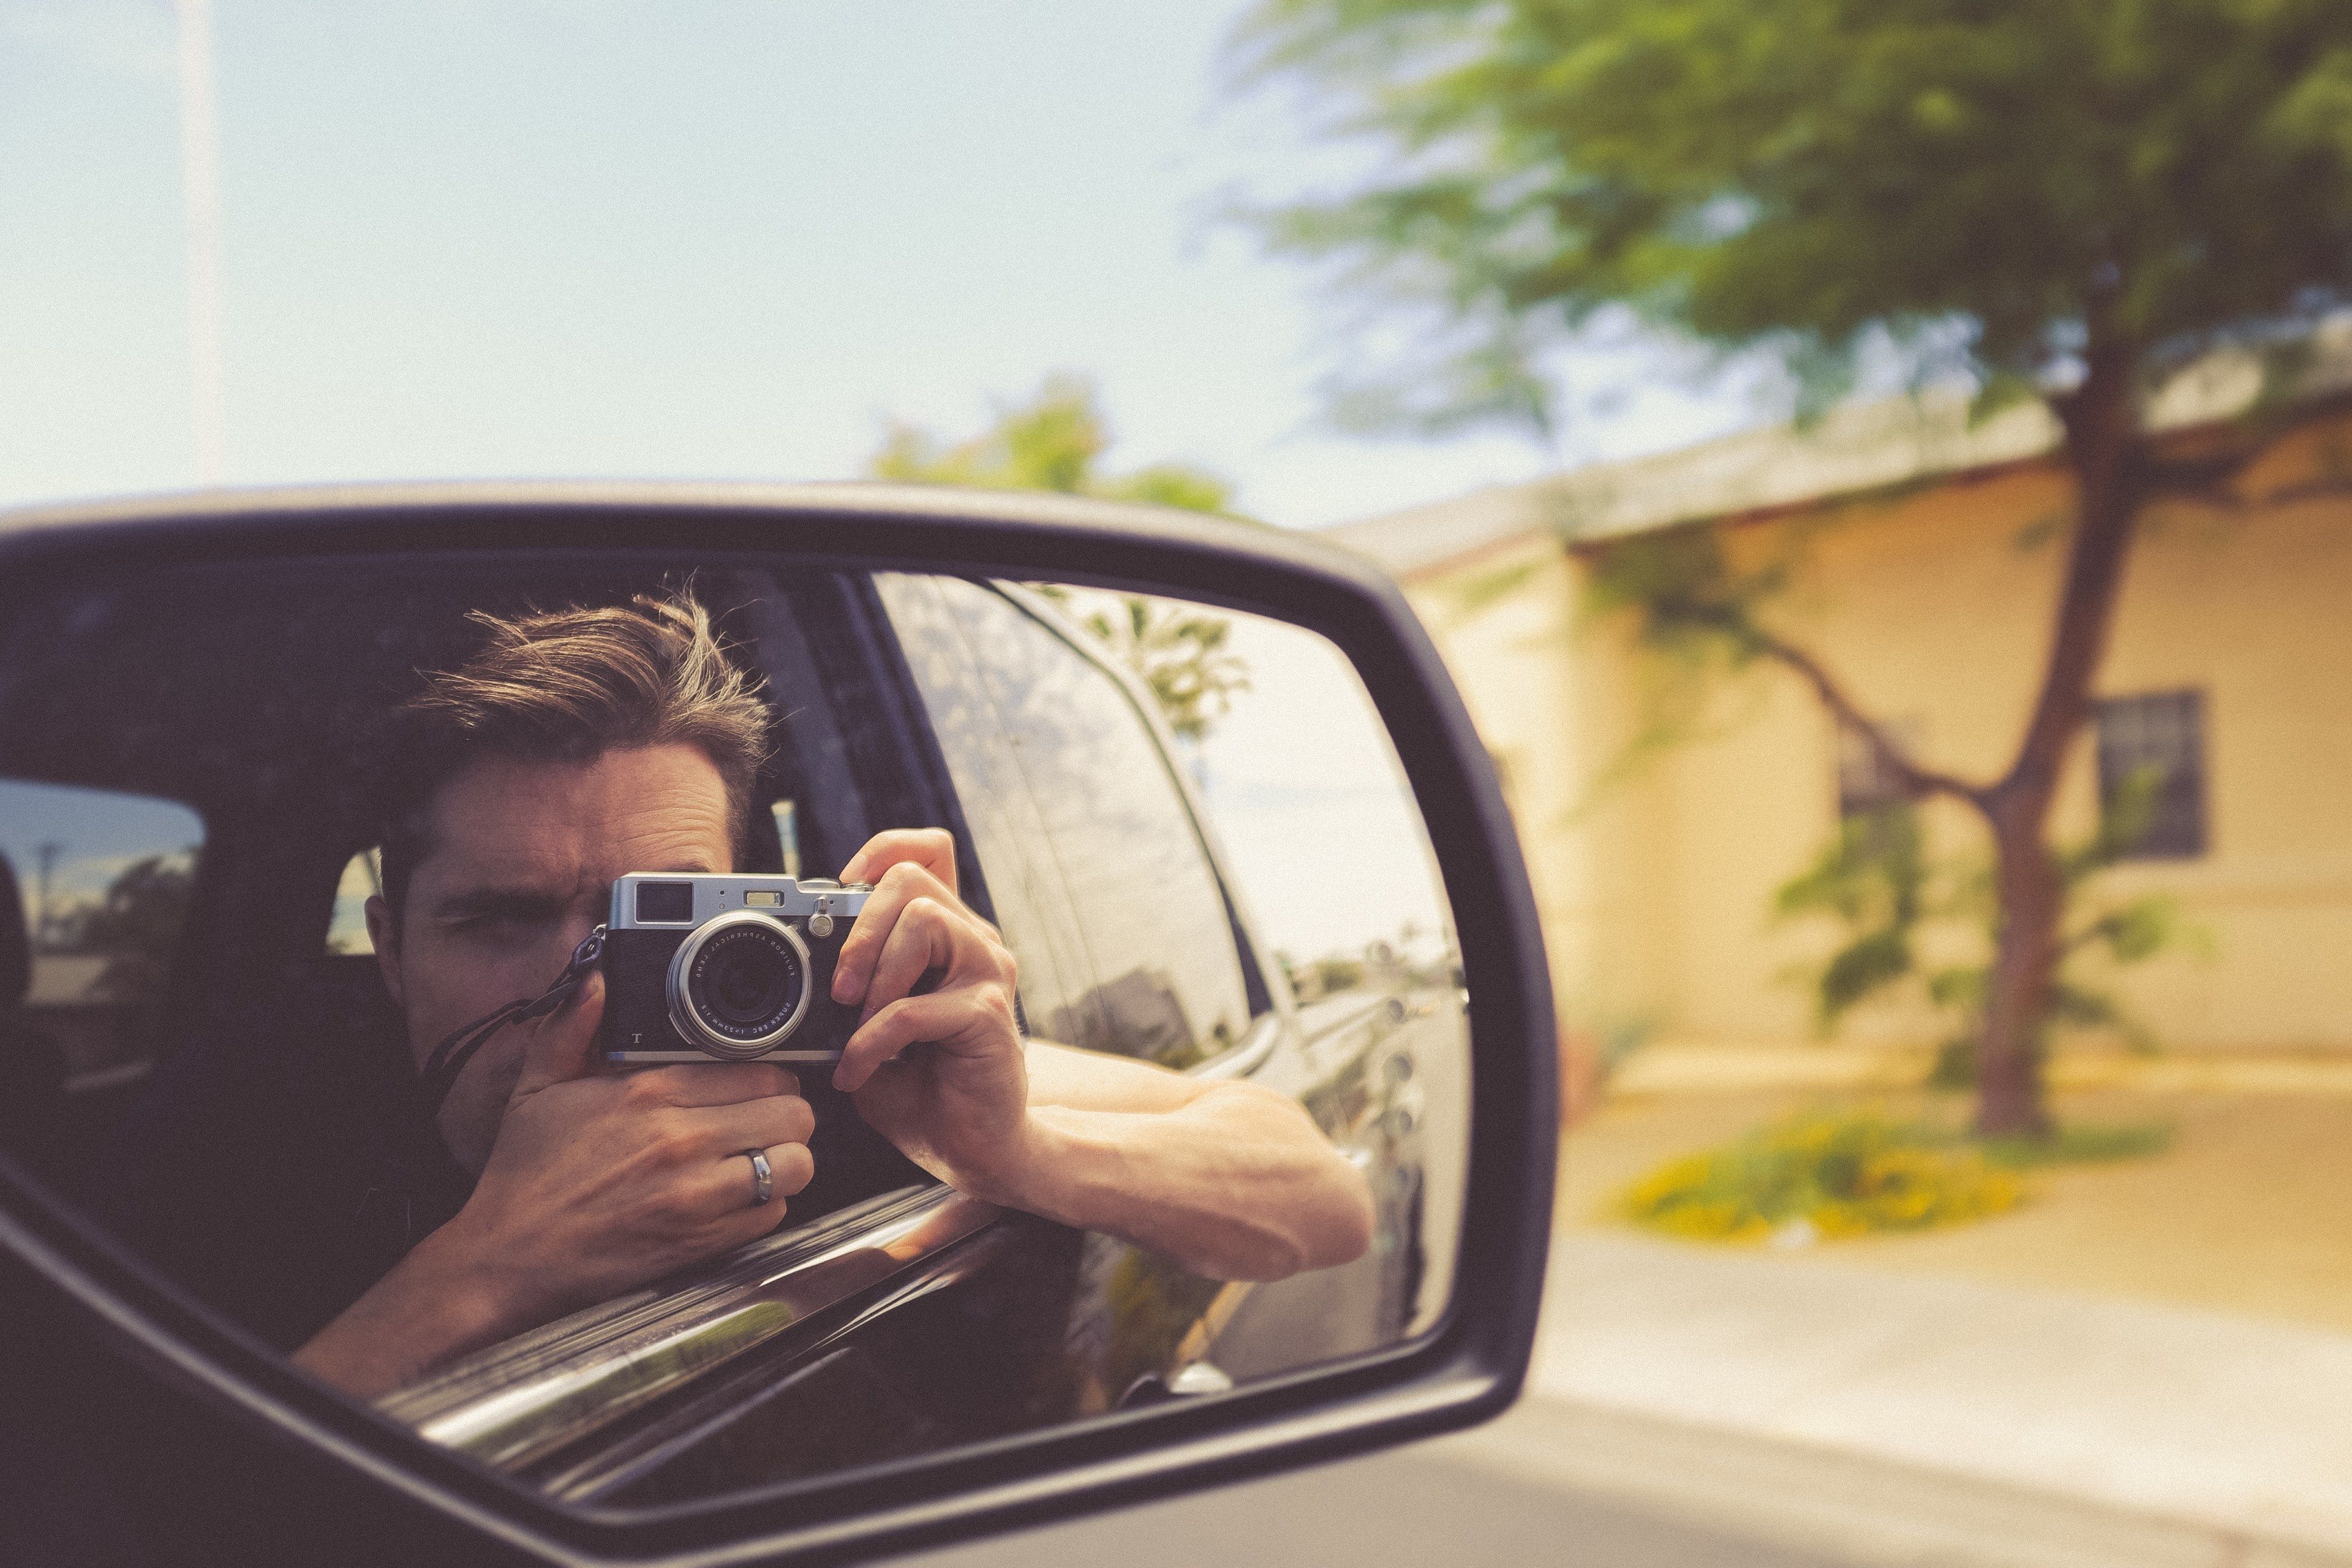 Wallpaper / a photographer taking his self portrait in the passenger side mirror, _passenger mirror selfie 4k wallpaper